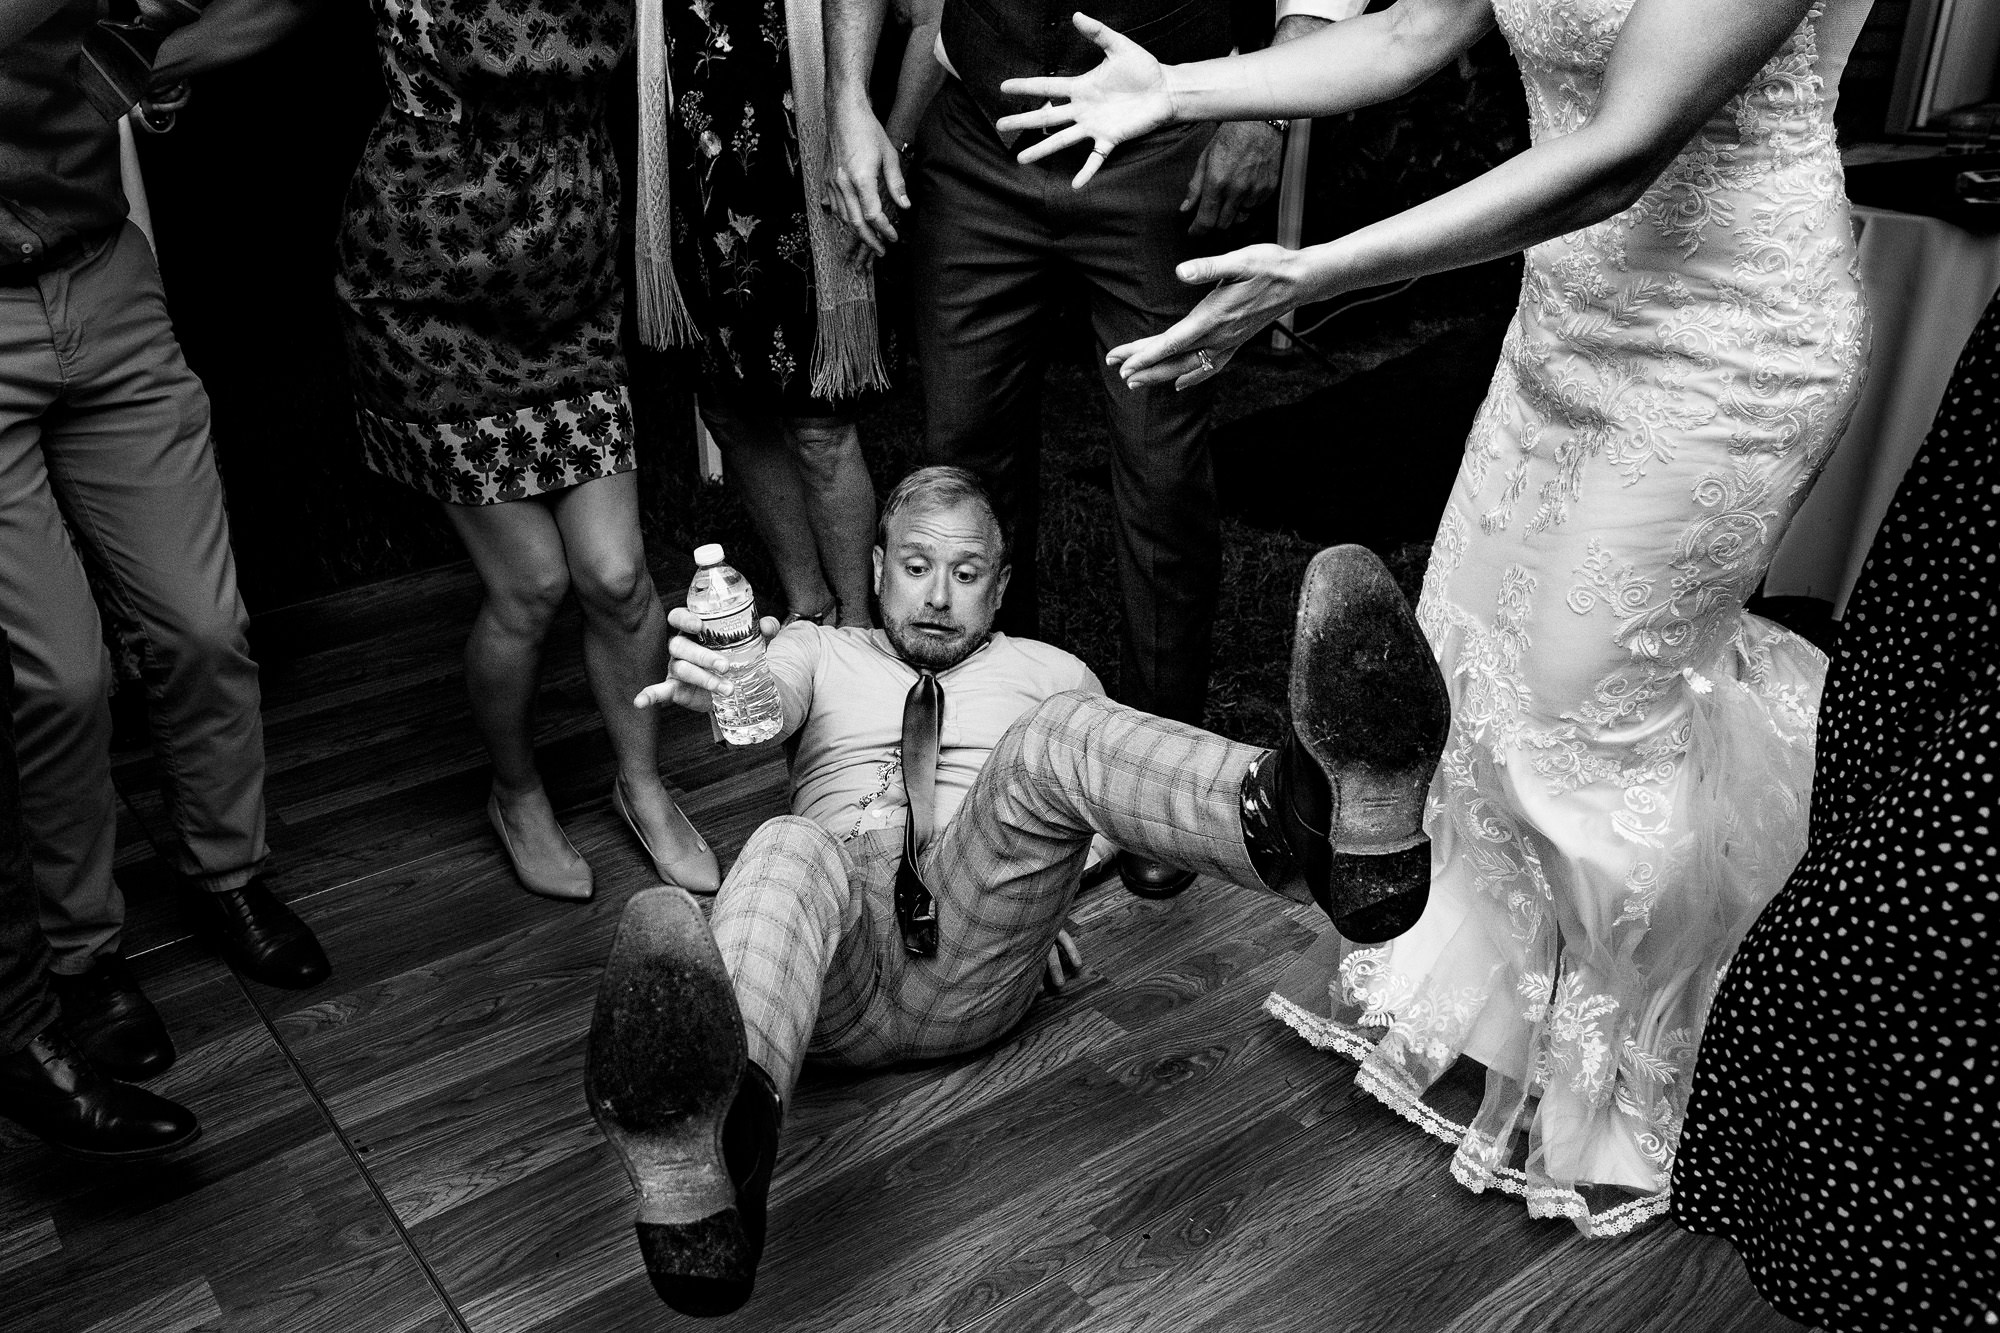 Newlyweds dancing joyfully with friends at their wedding reception.